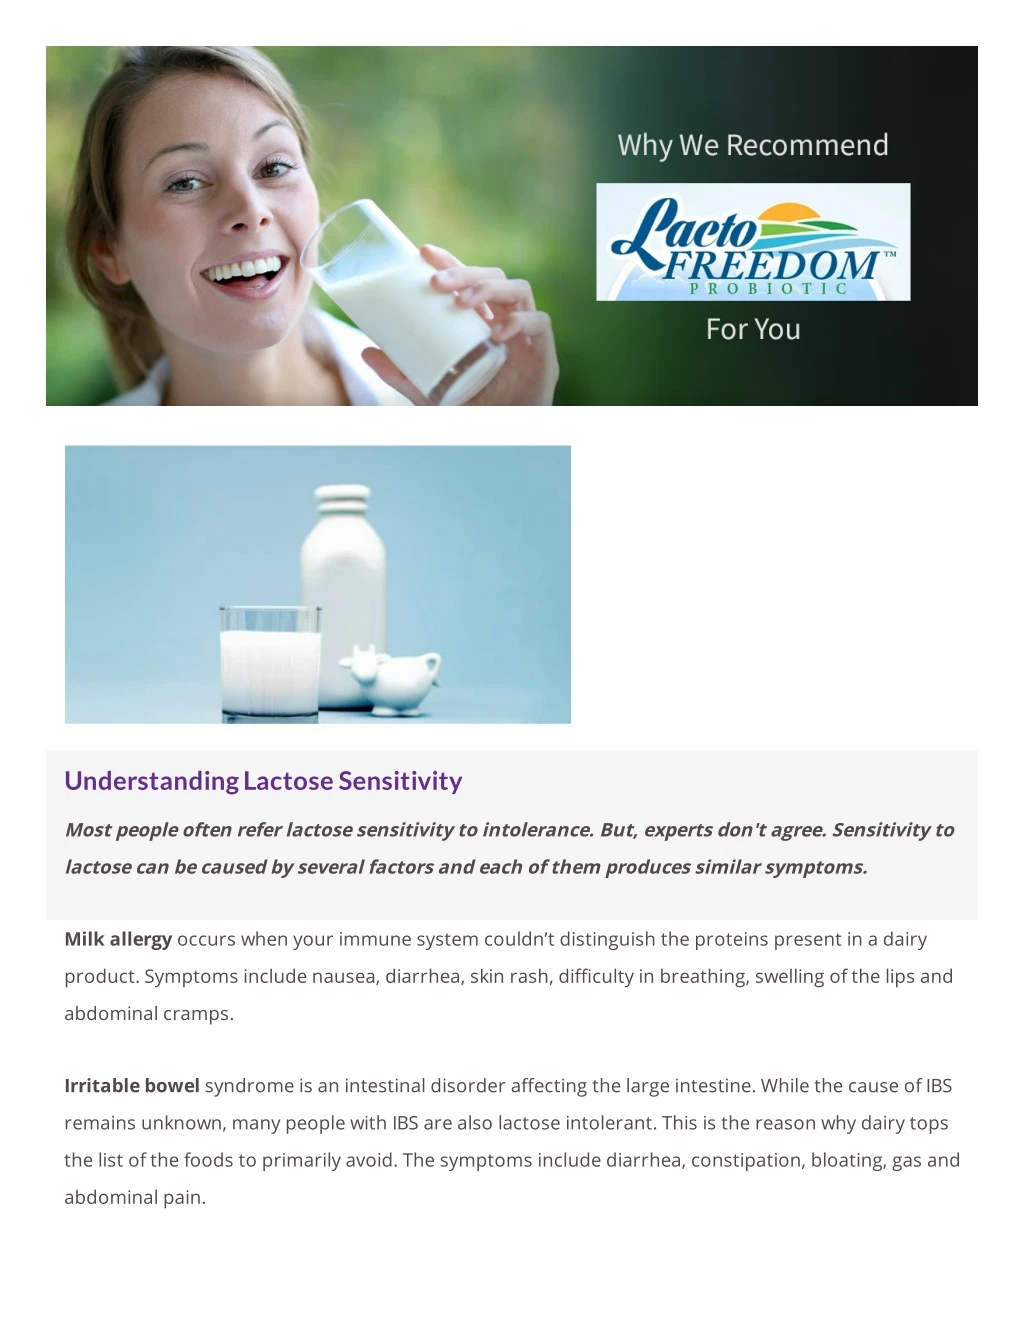 understanding lactose sensitivity